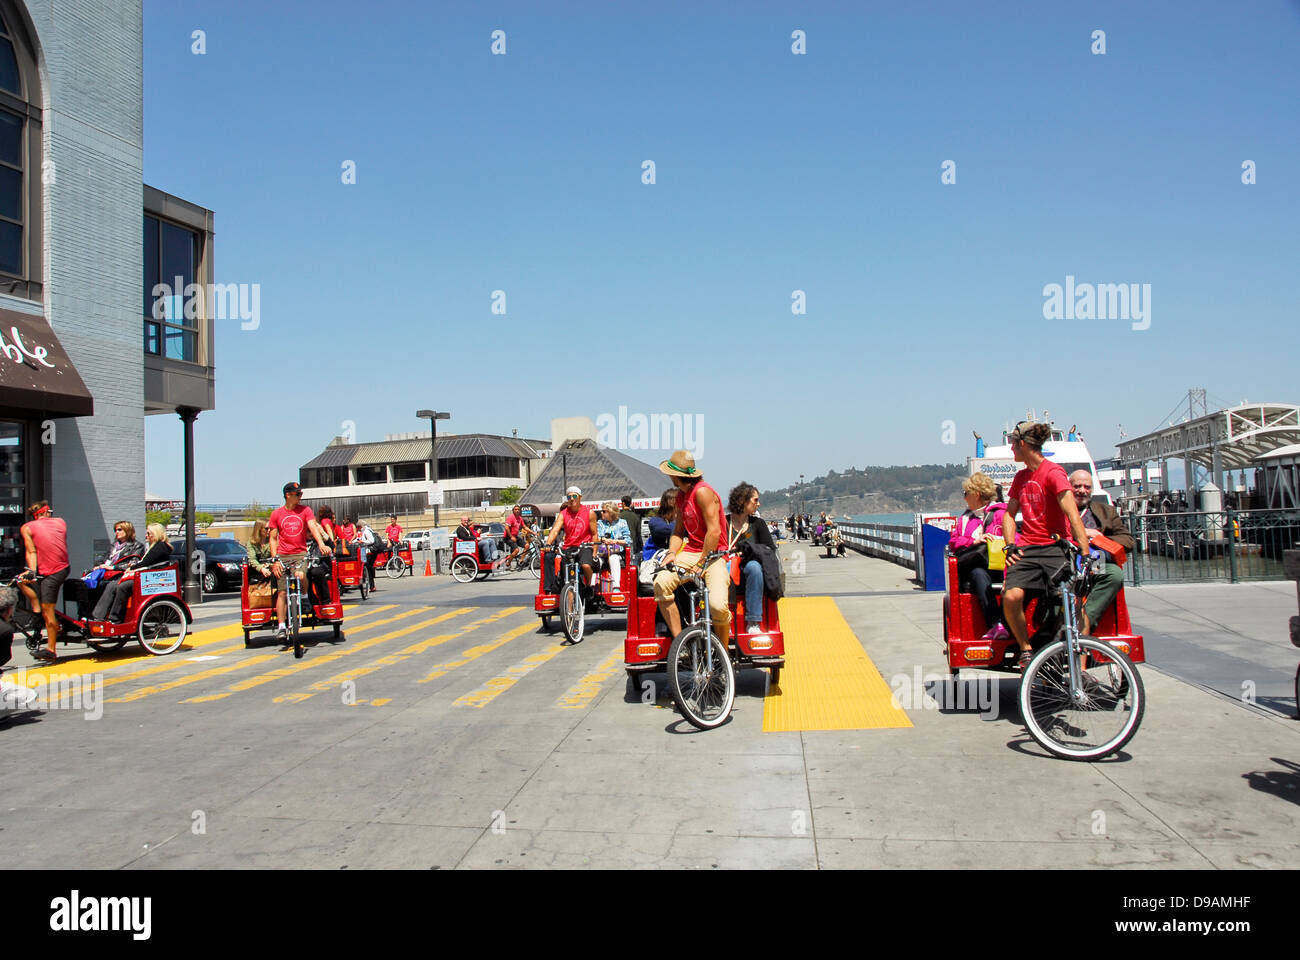 Pedicab rides on the Embarcadero in San Francisco, California Stock Photo